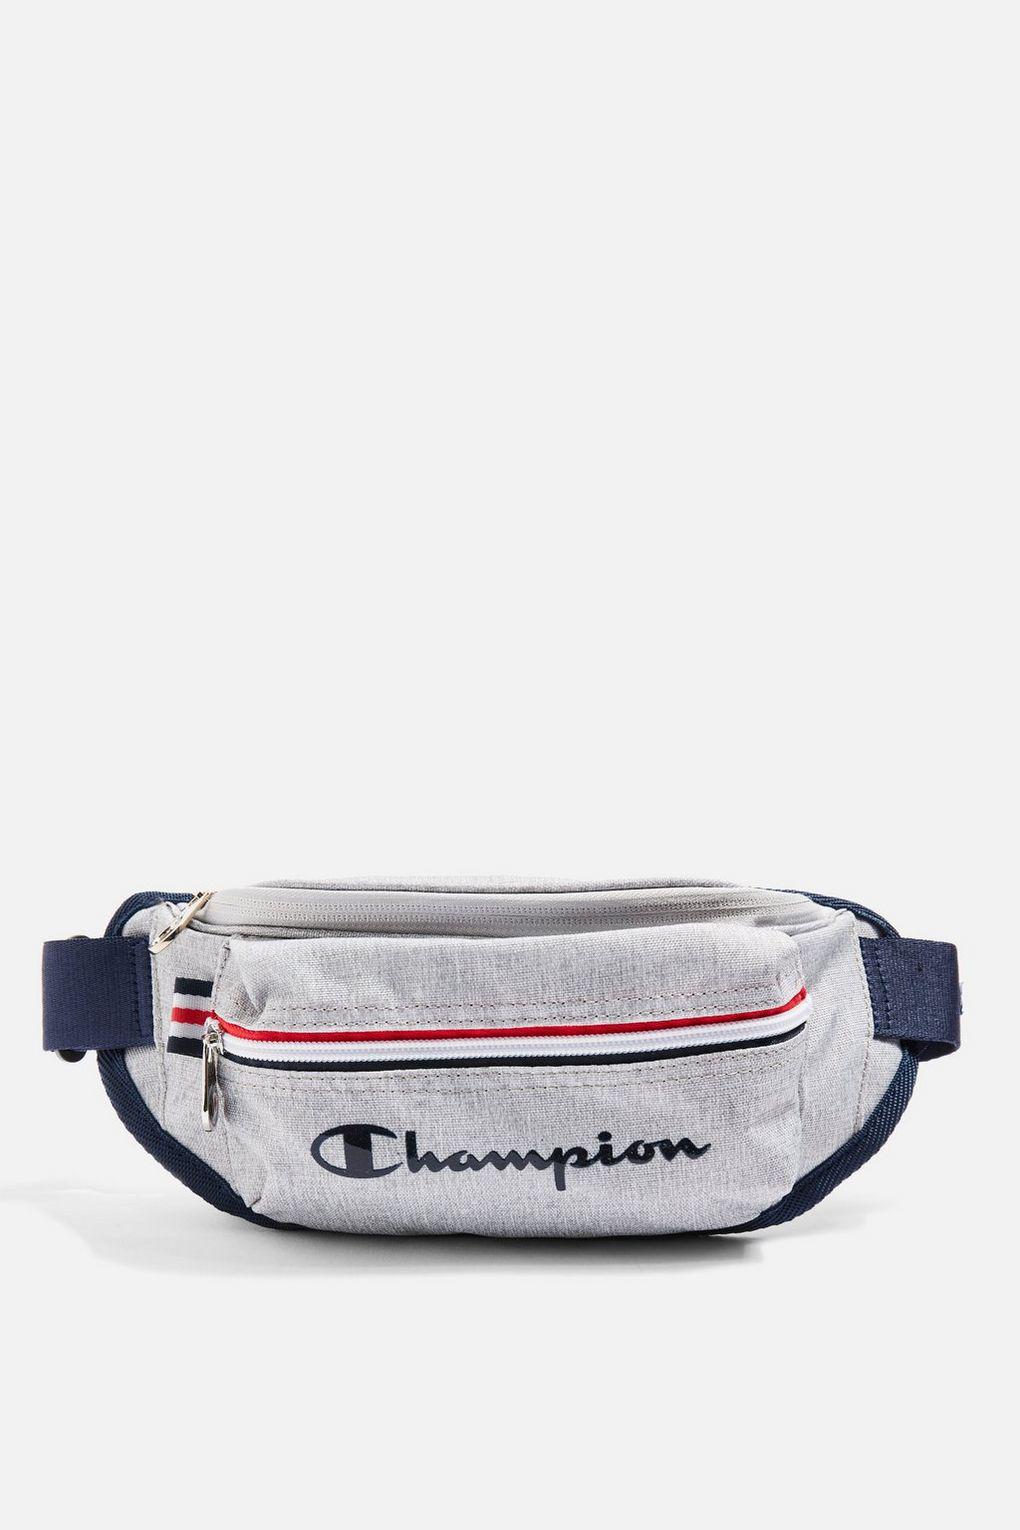 champion bum bag grey